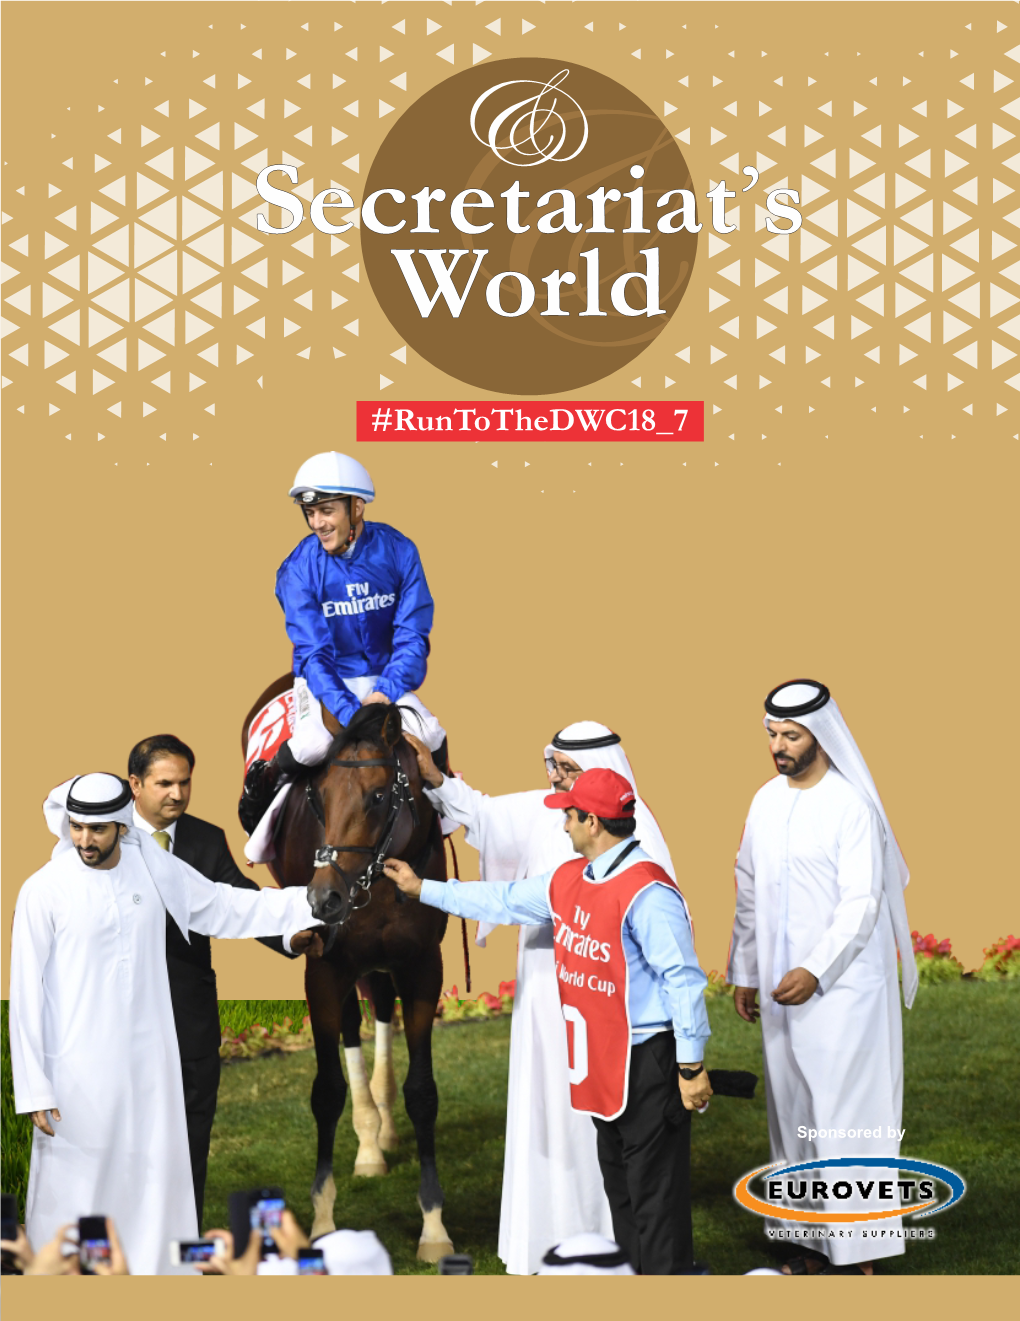 Secretariat's Secretariat's World Secretariat's World